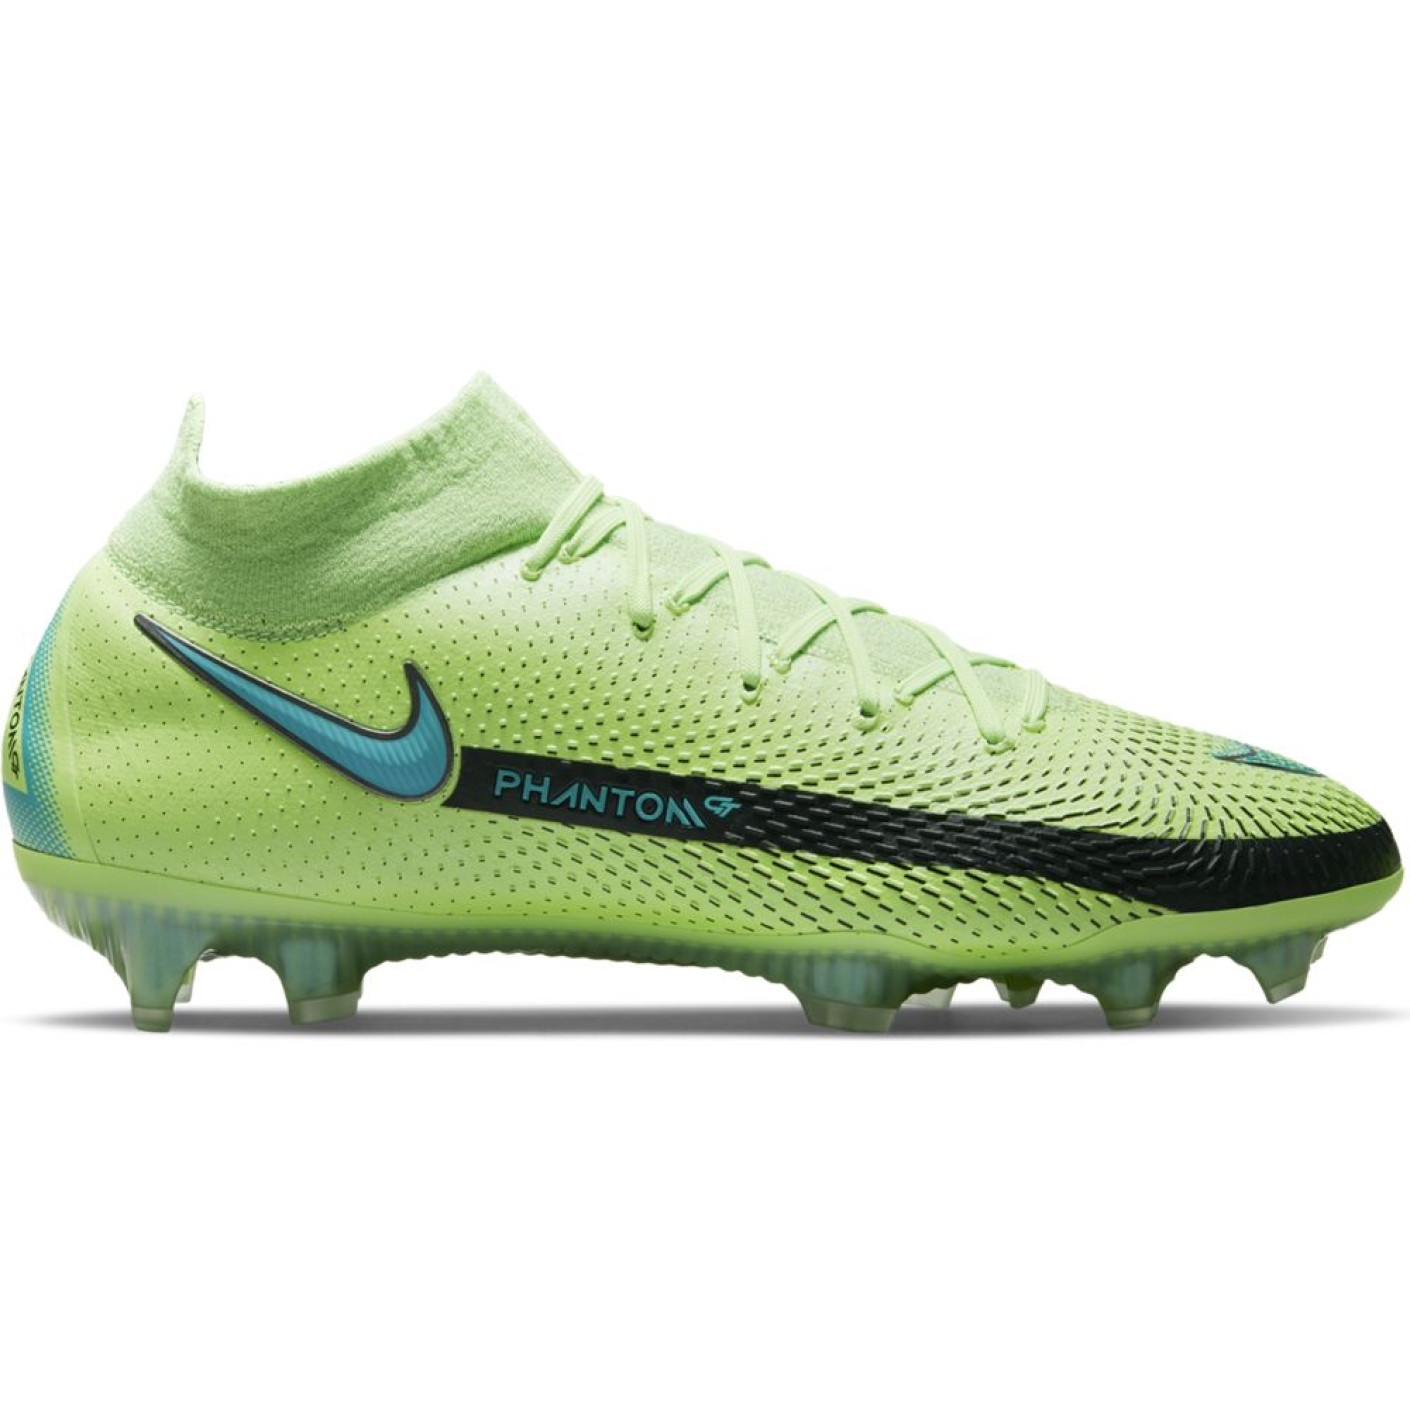 Chaussures de Foot Nike Phantom GT Elite DF Grass (FG) Lime Turquoise